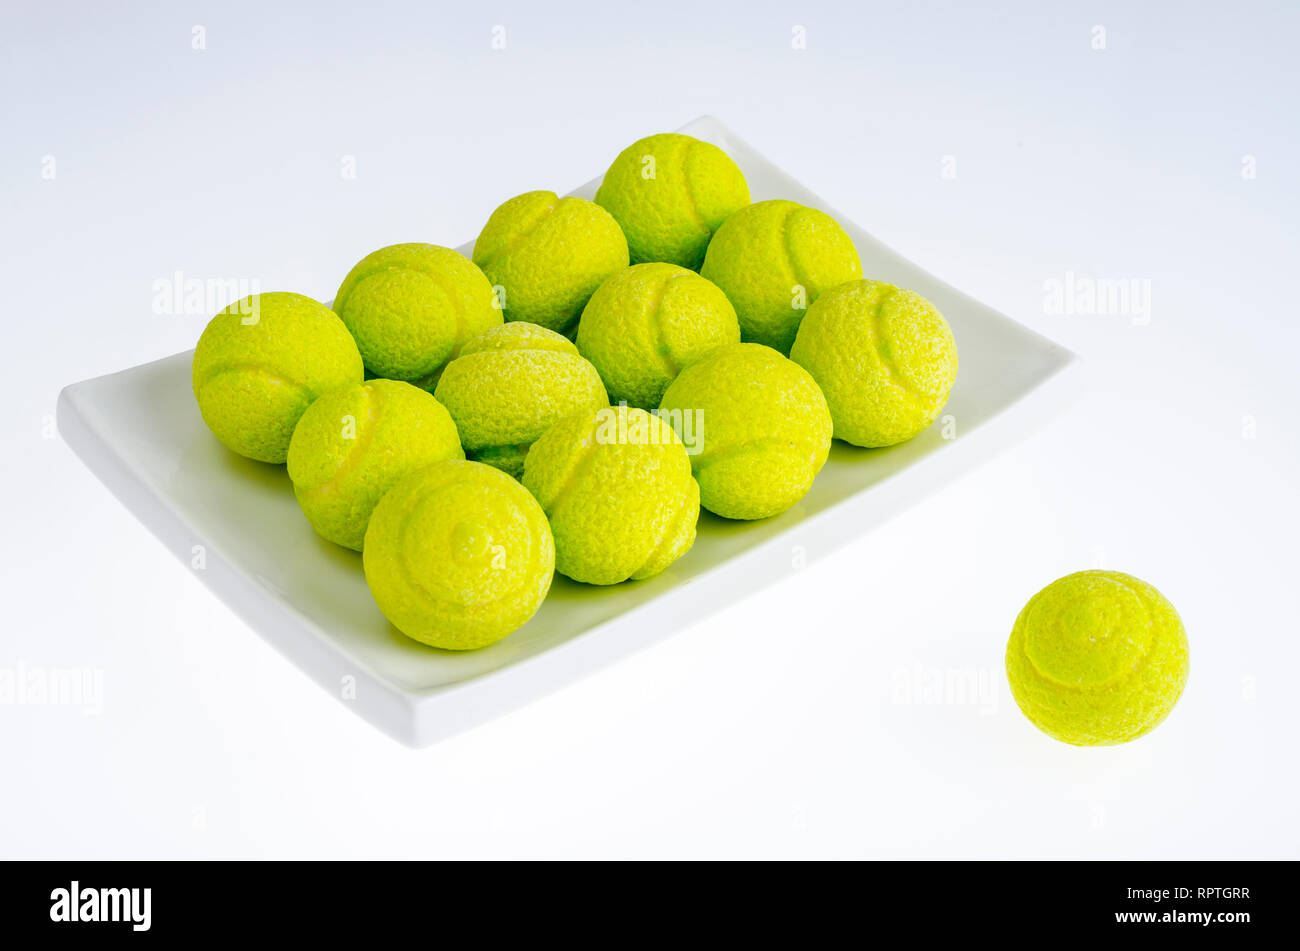 Candies gum balls in shape of tennis balls. Studio Photo Stock Photo